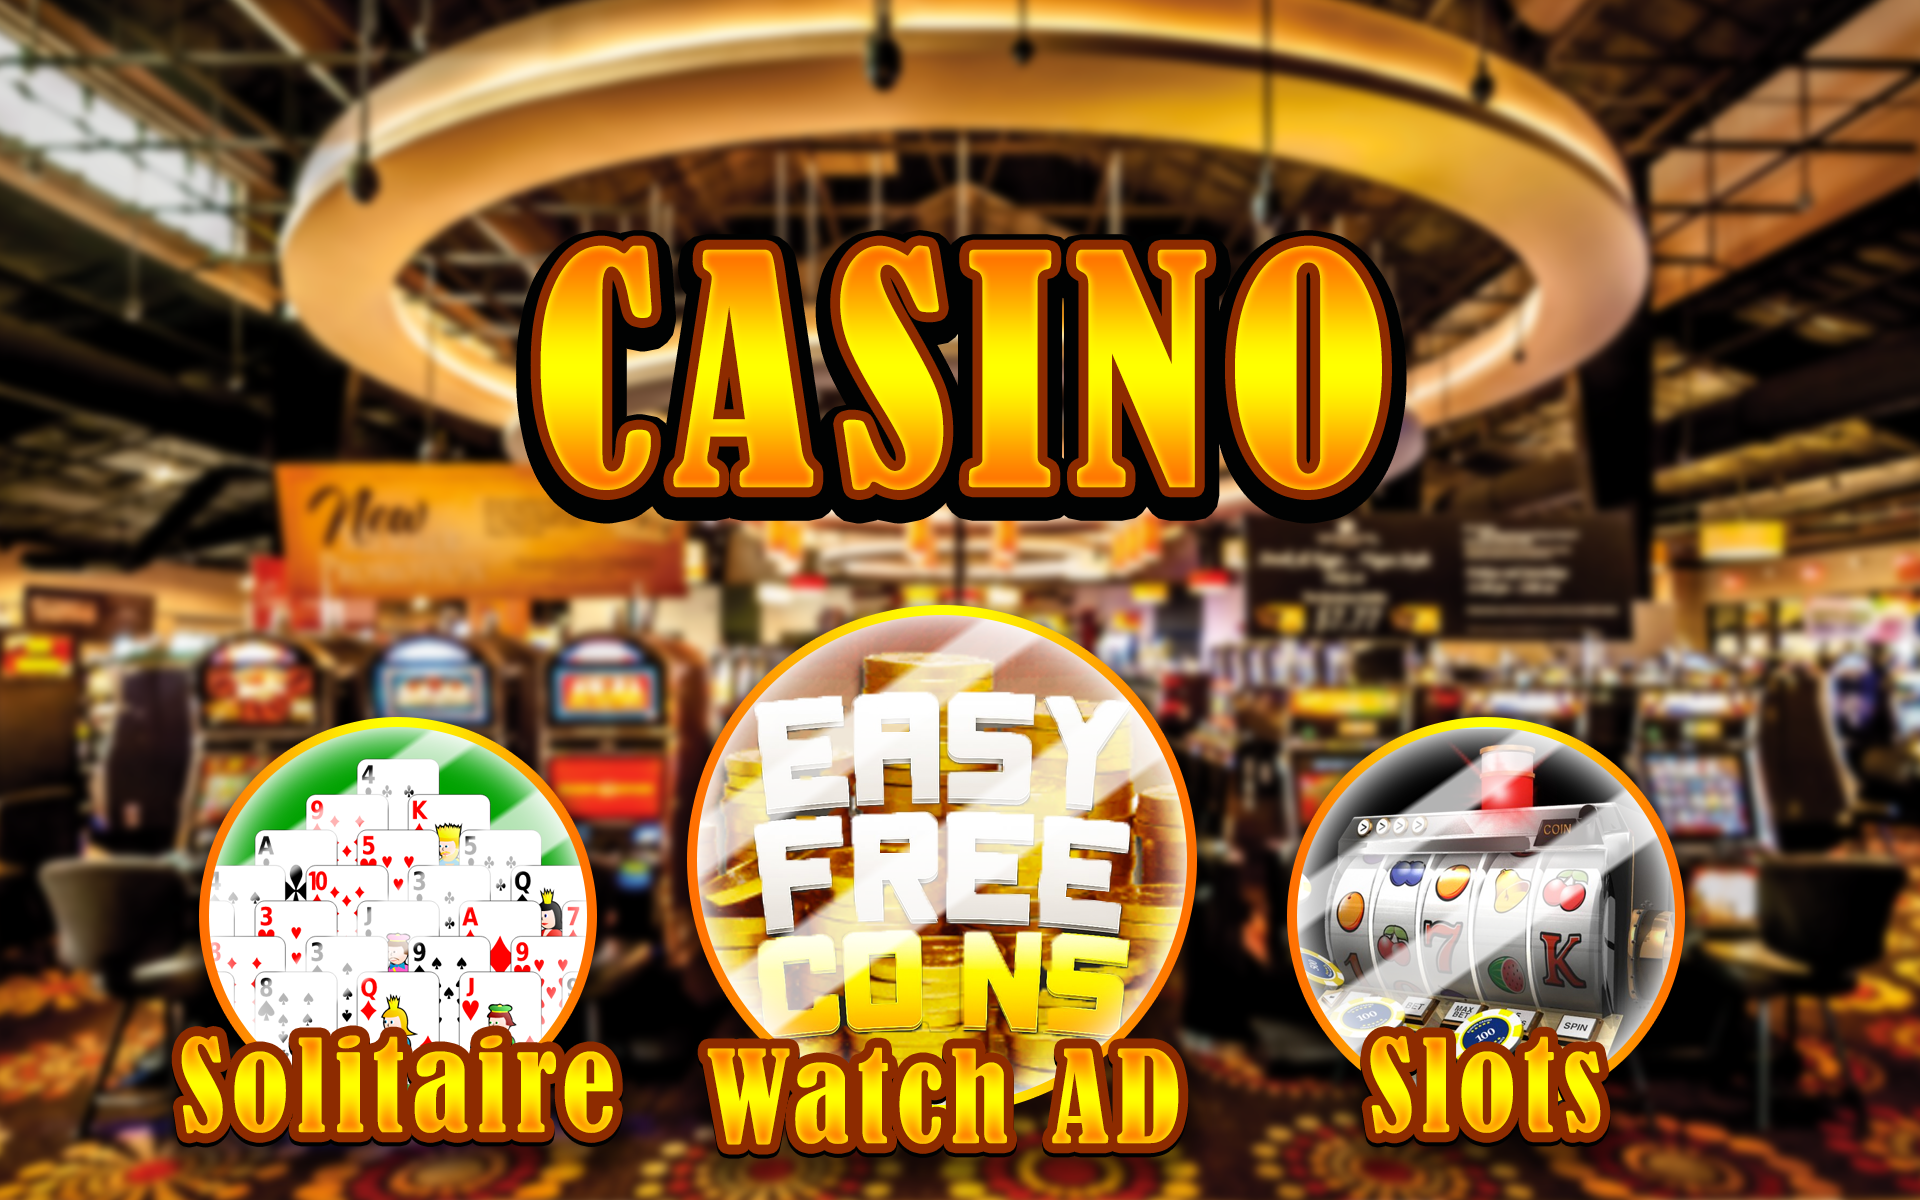 Buffalo slot machine : Casino Slots 777 Wild Vegas